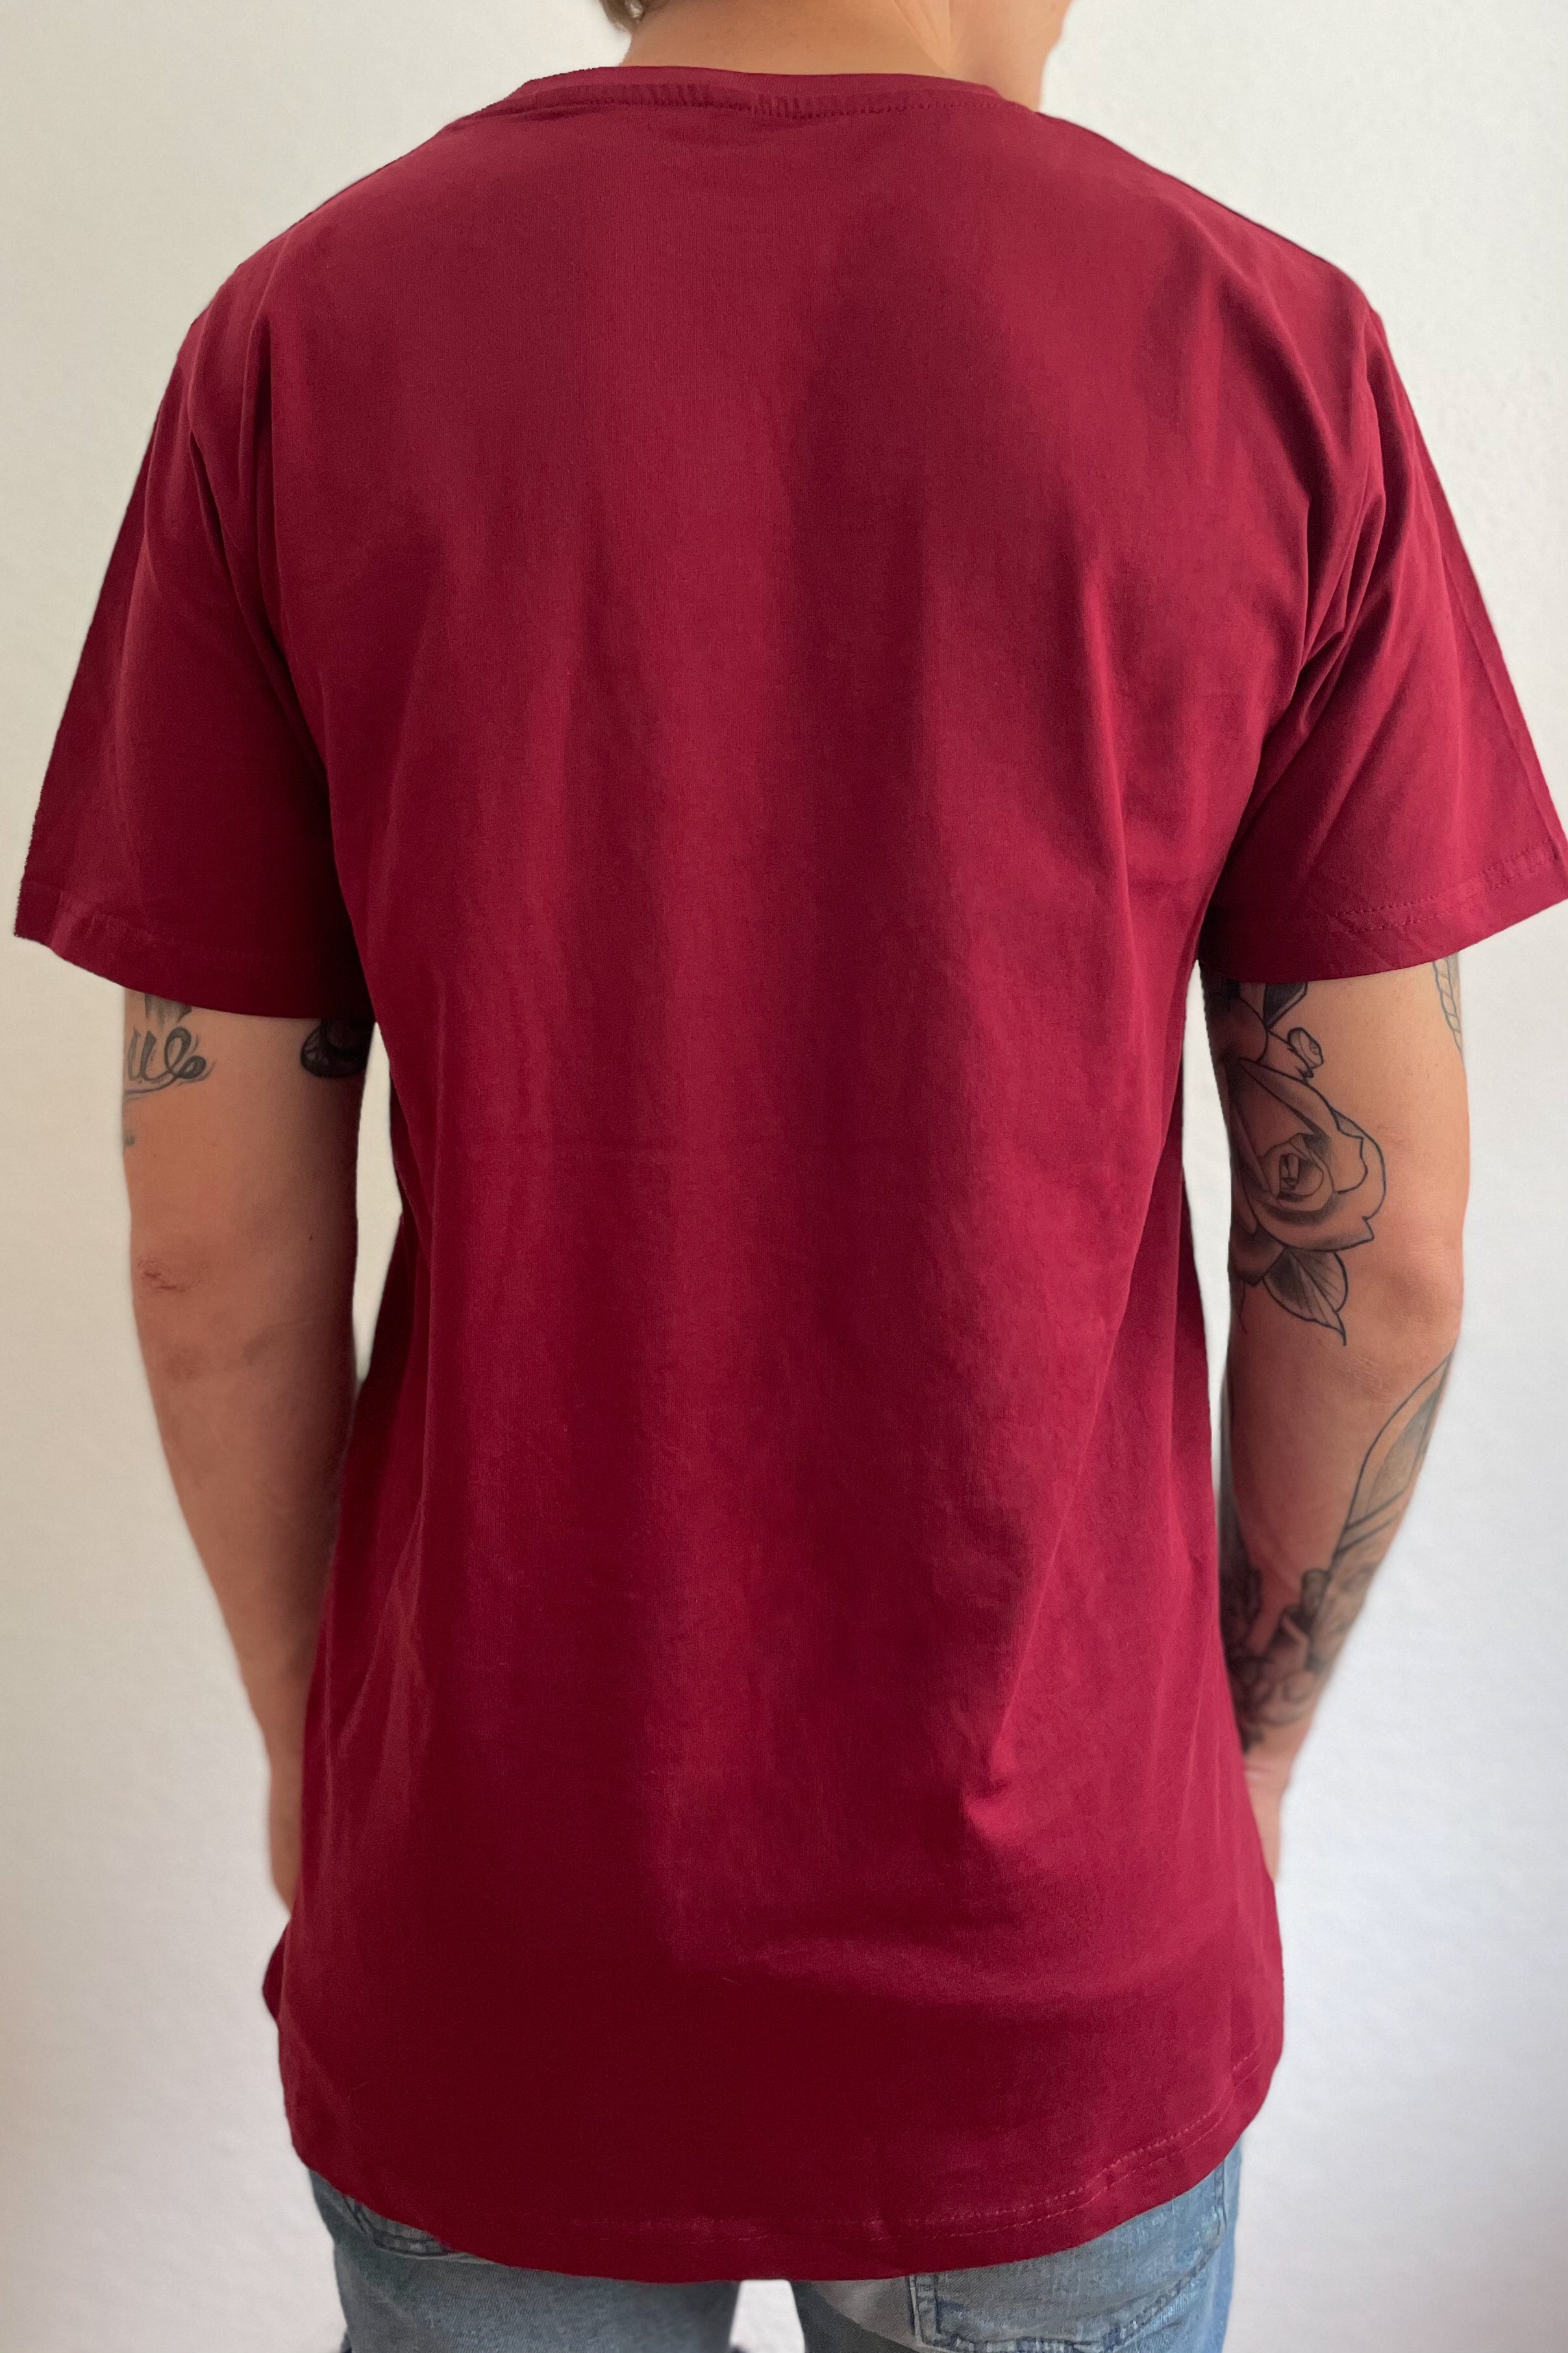 T-Shirt "Teddy" basic burgundy red